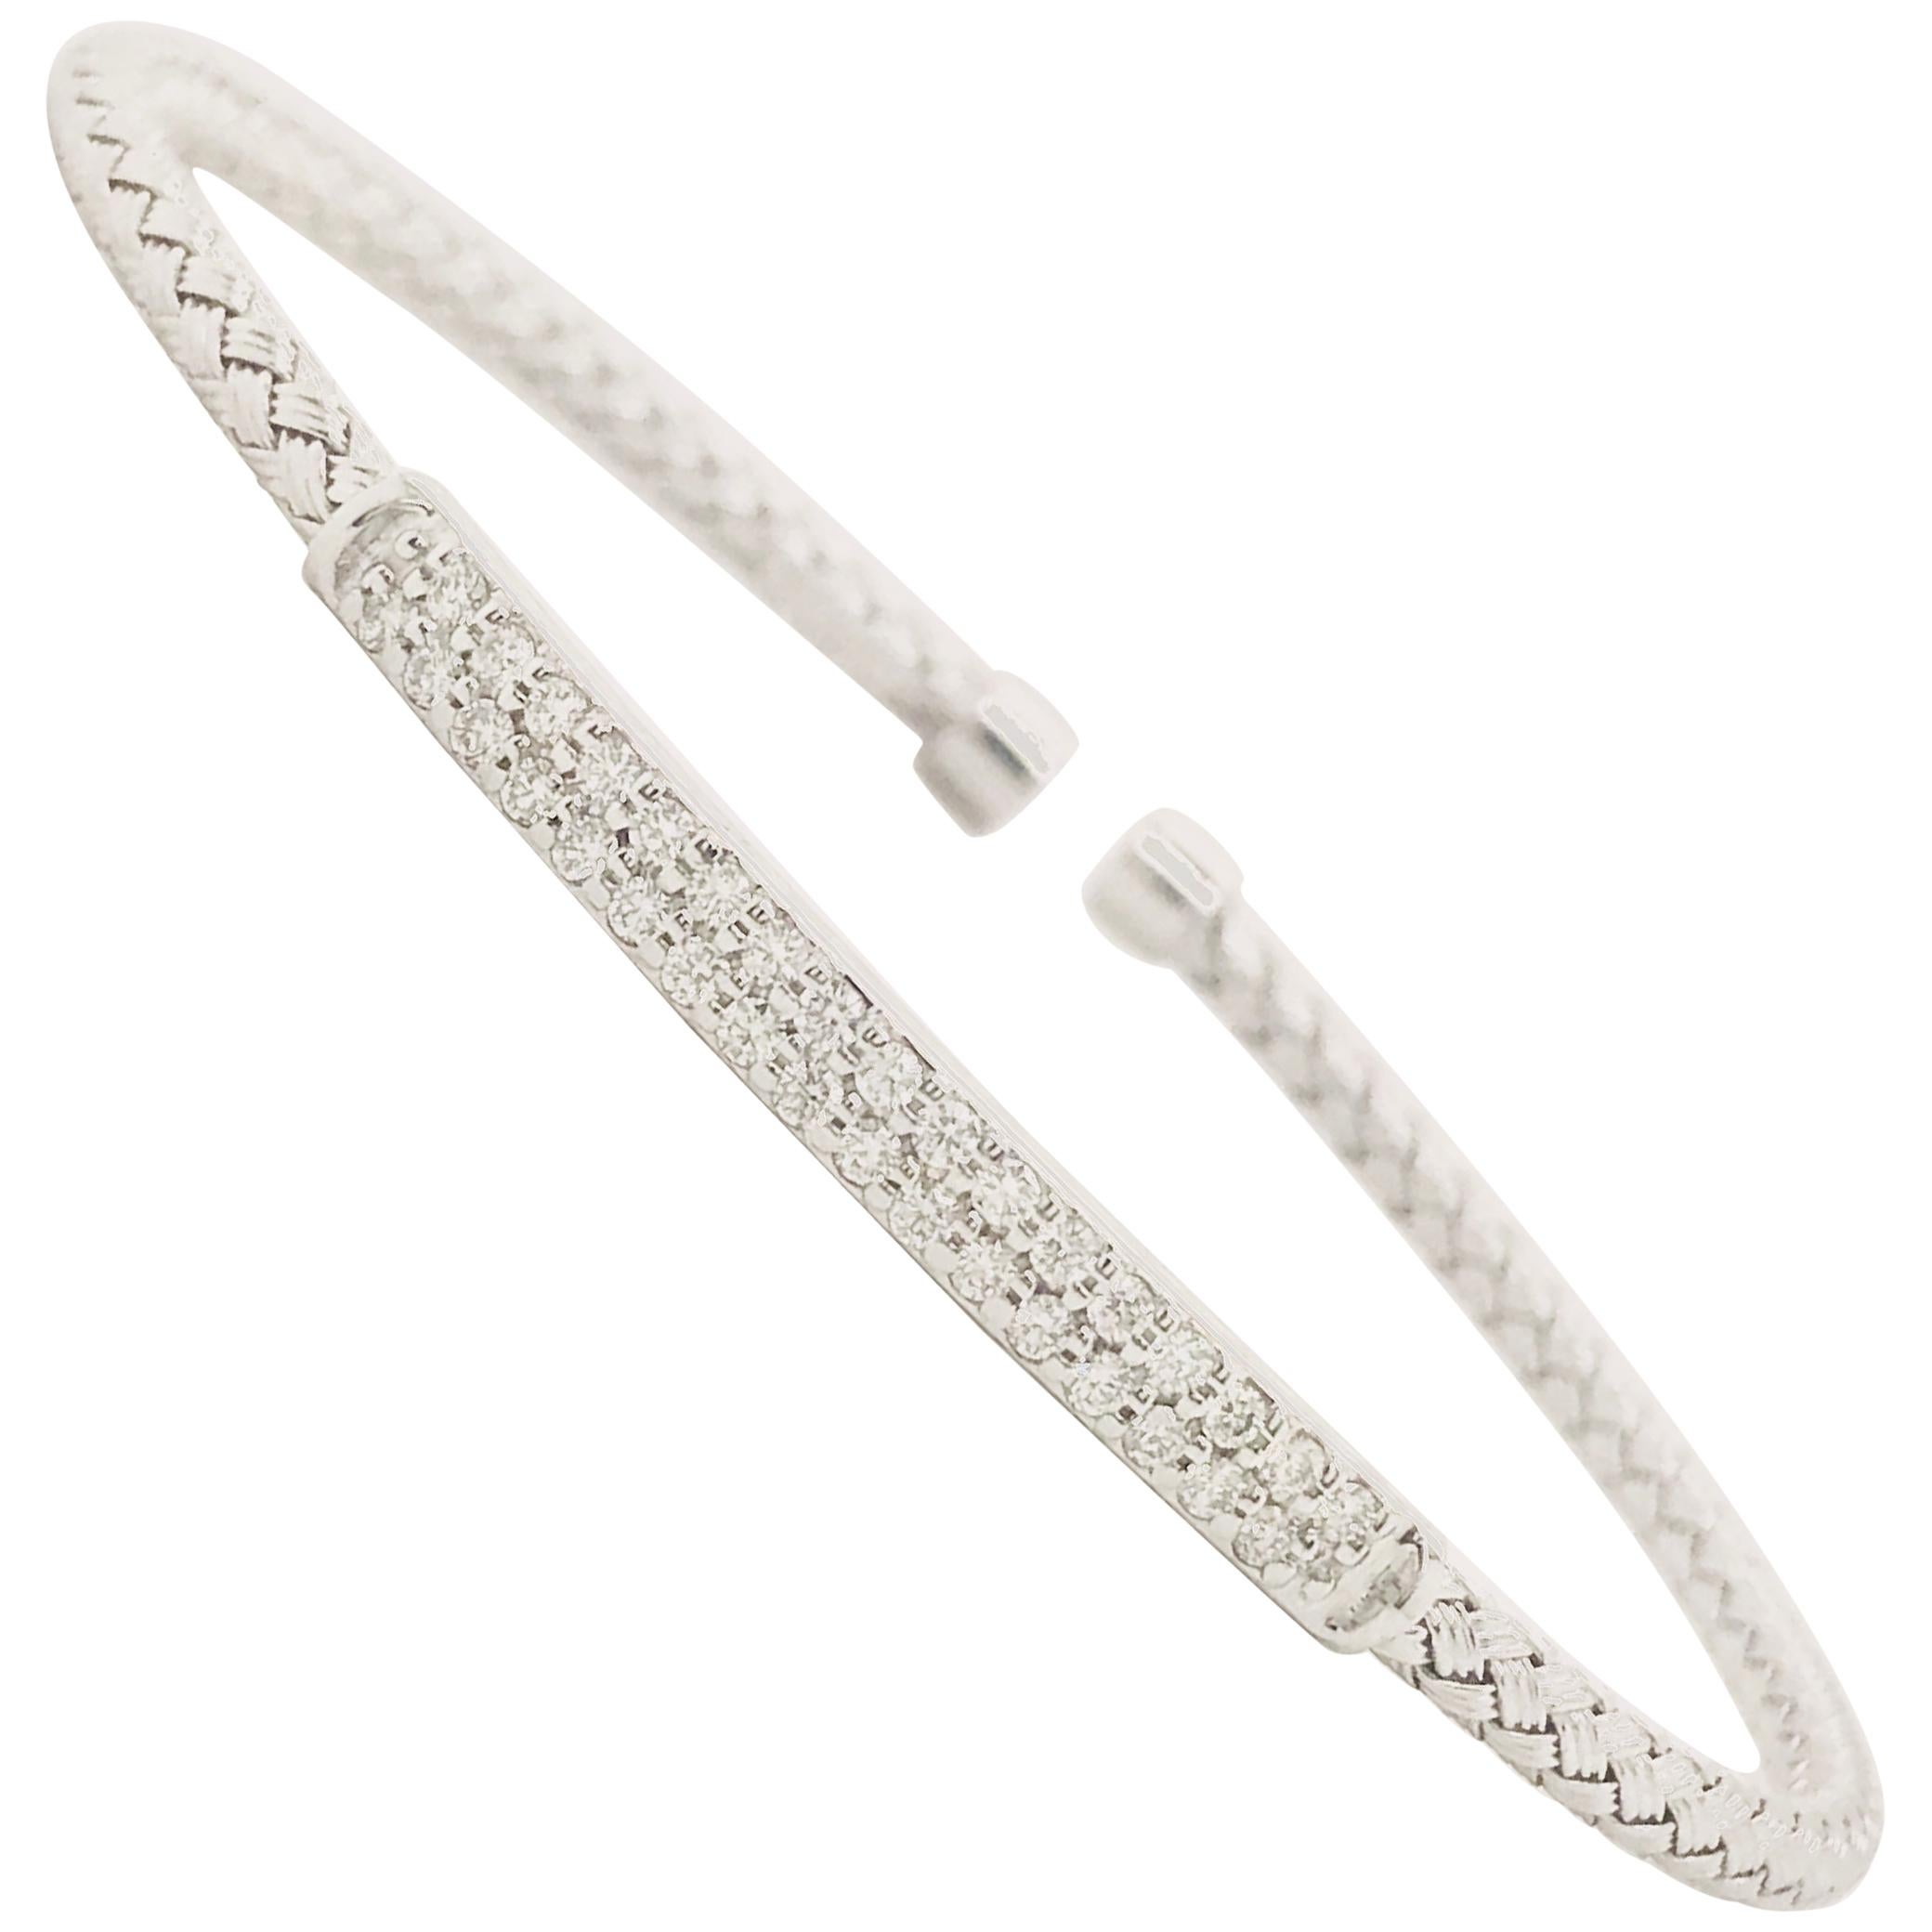 Pave Diamond Bar Bangle Bracelet with Braided Chain 14 Karat White Gold Flexible